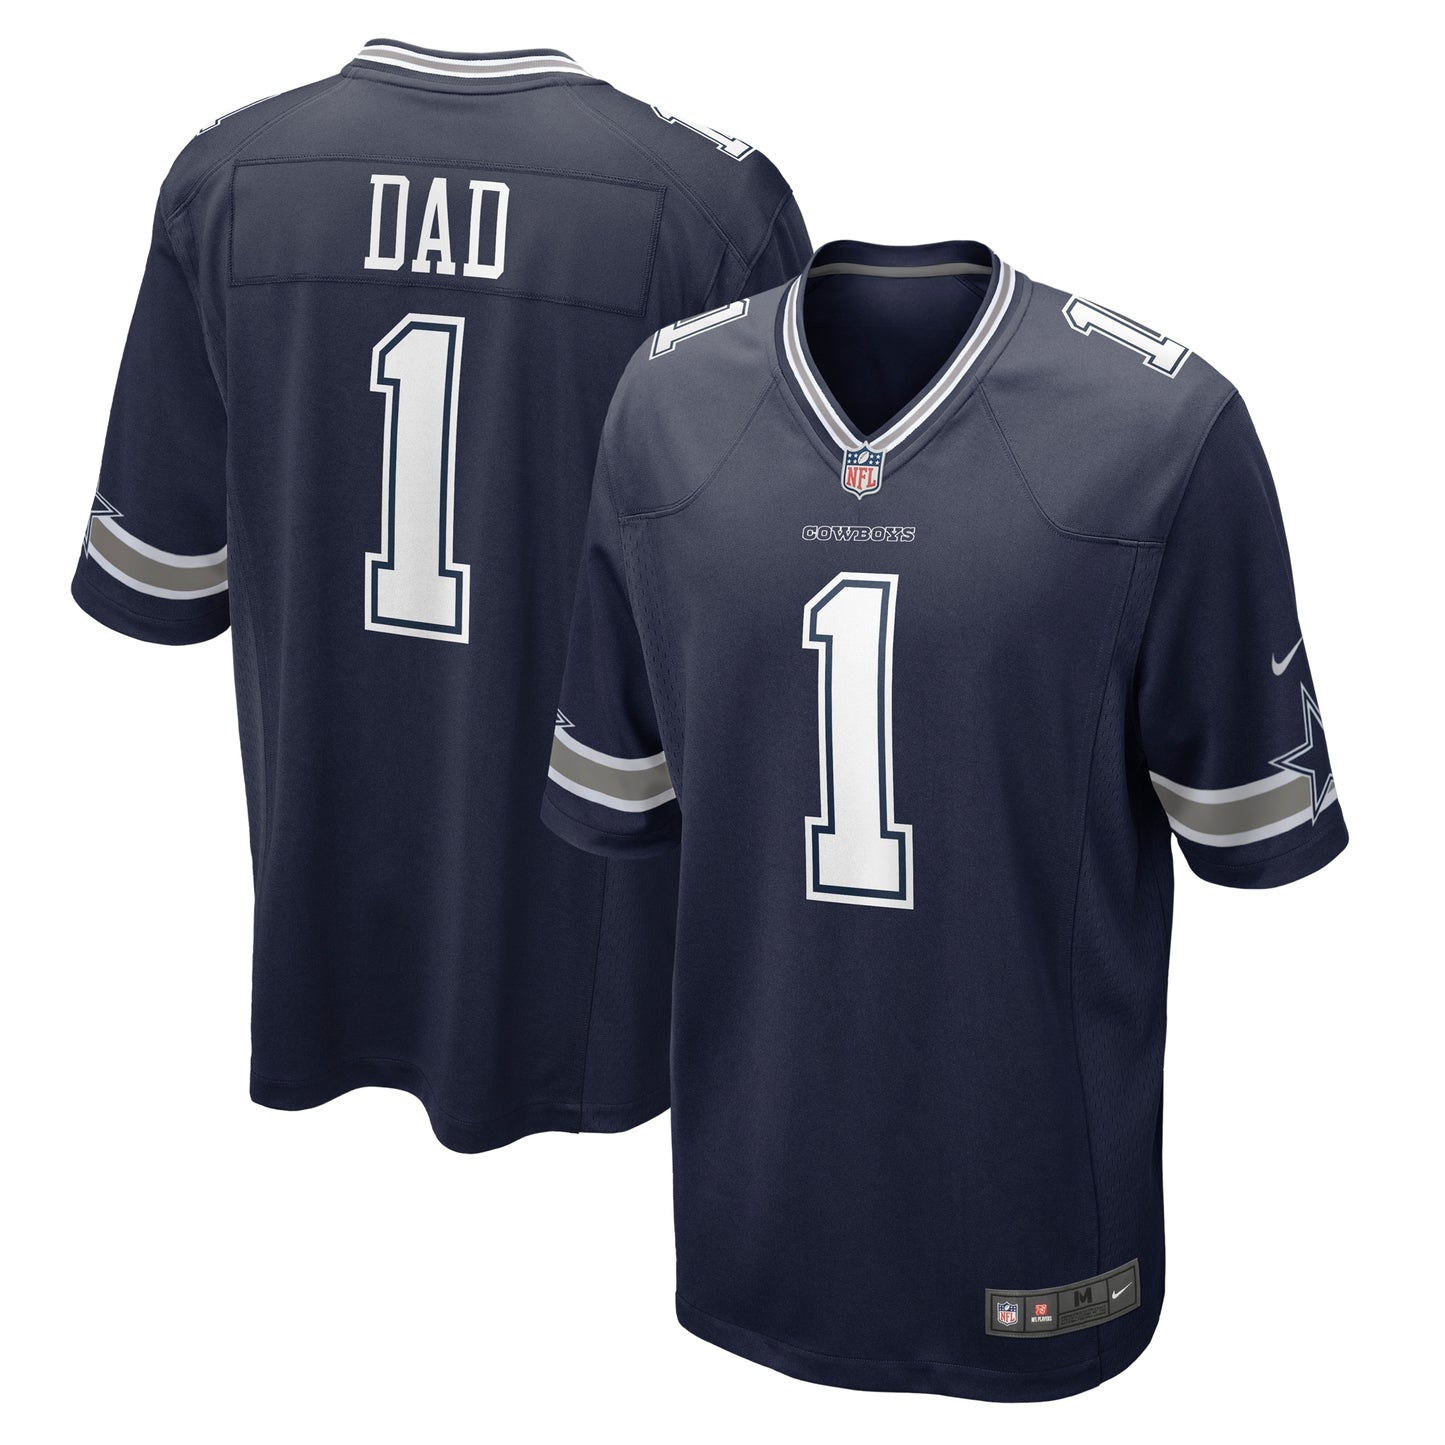 Number 1 Dad Dallas Cowboys Nike Game Jersey - Navy